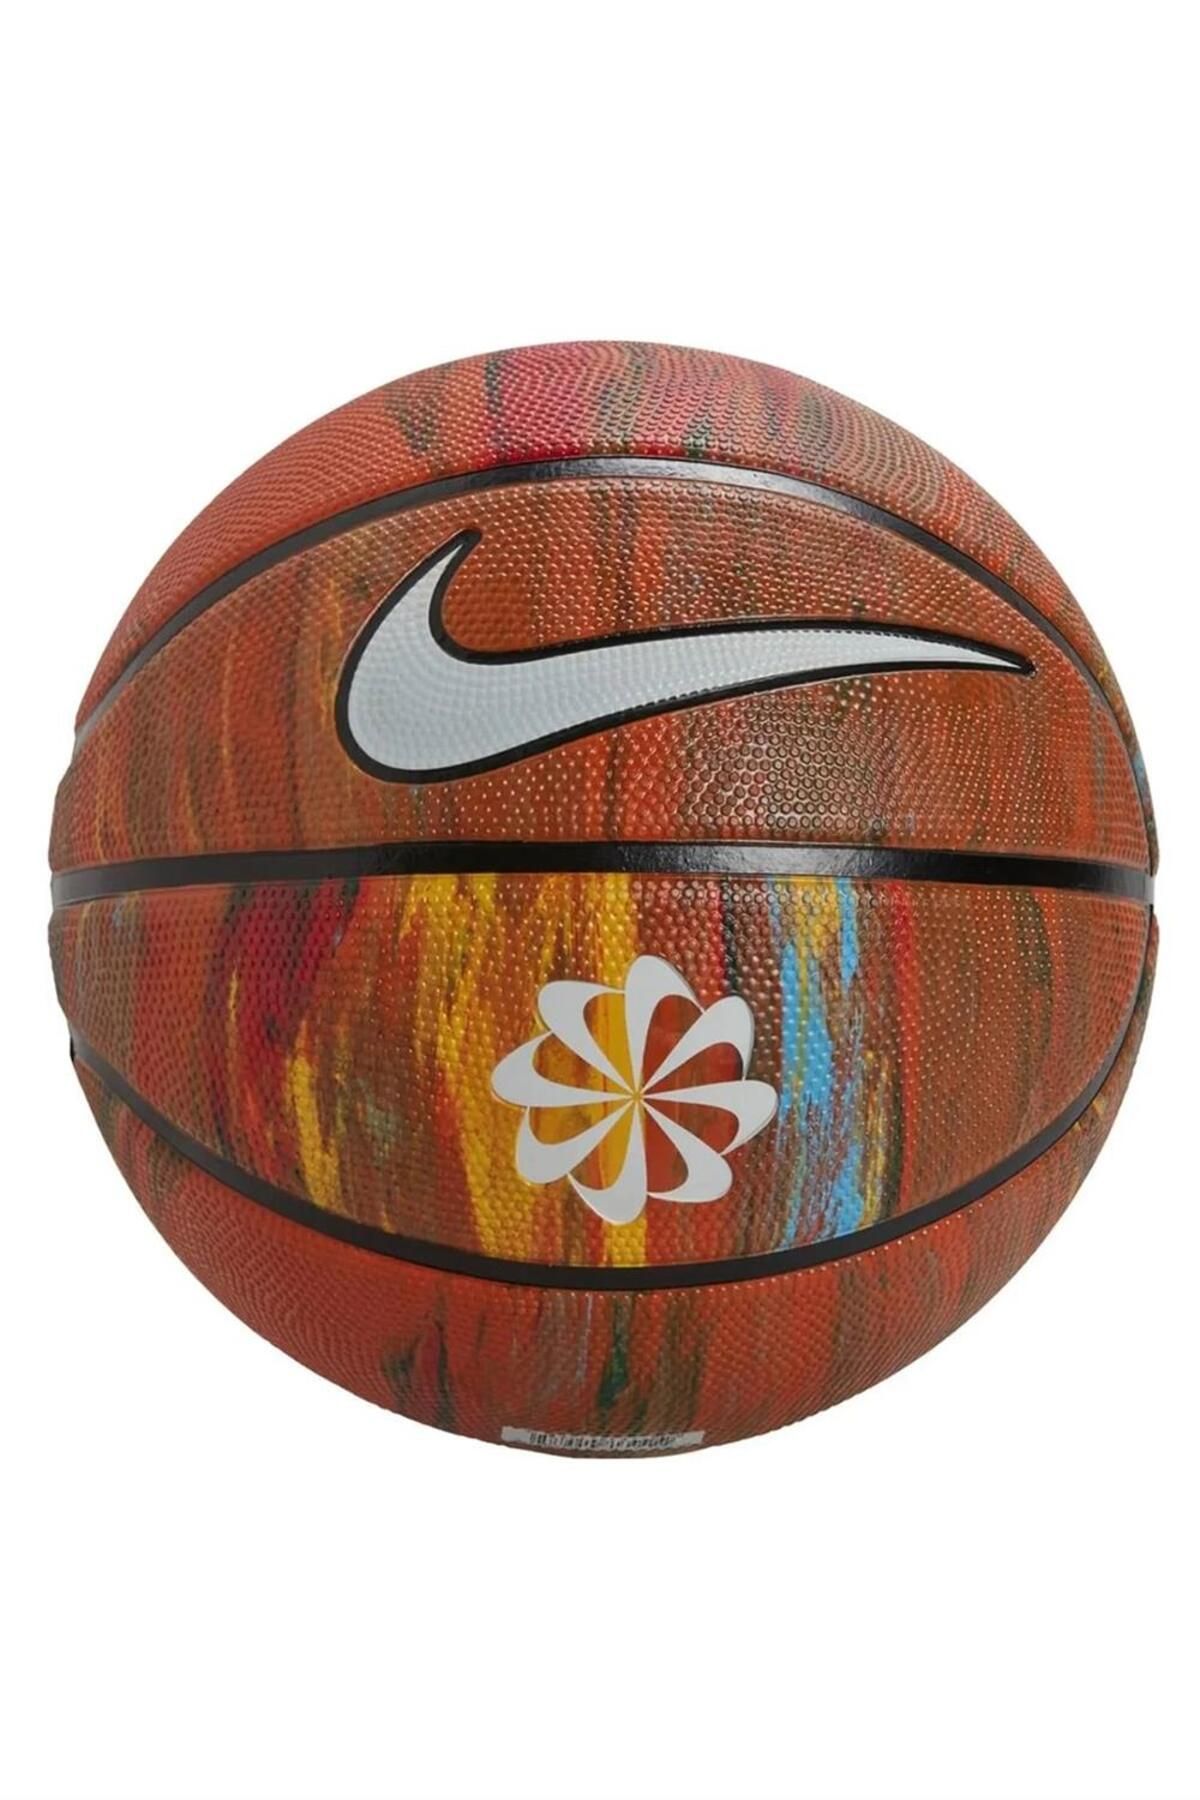 Nike Everyday Playground 8p Basketbol Topu 7 Numara Kahverengi